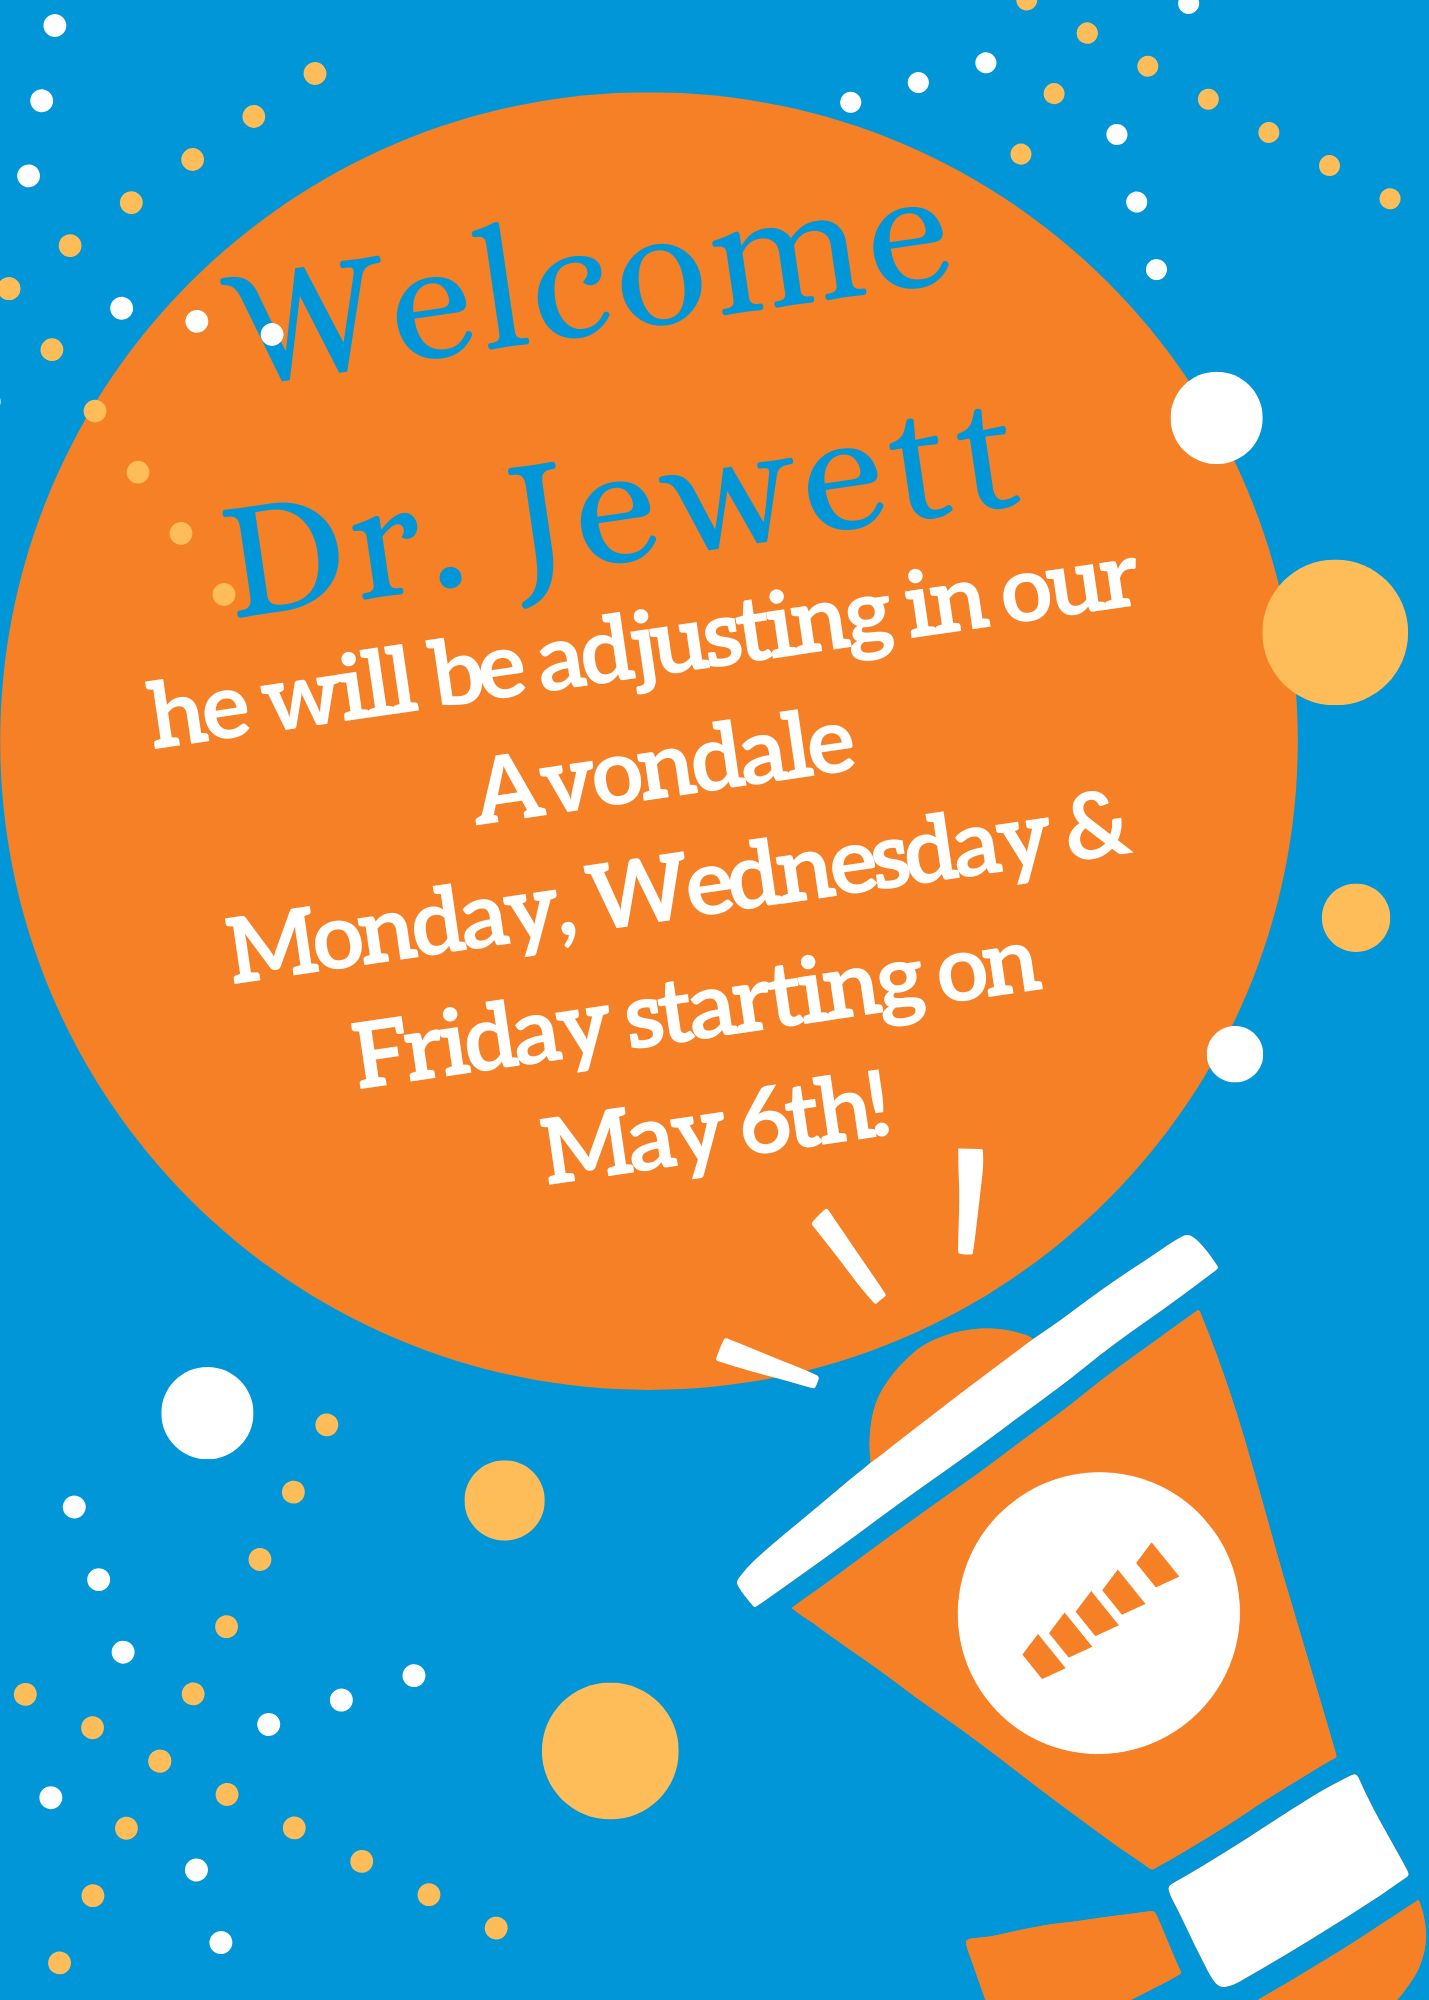 Chiropractor Avondale AZ Welcome Dr Jewett